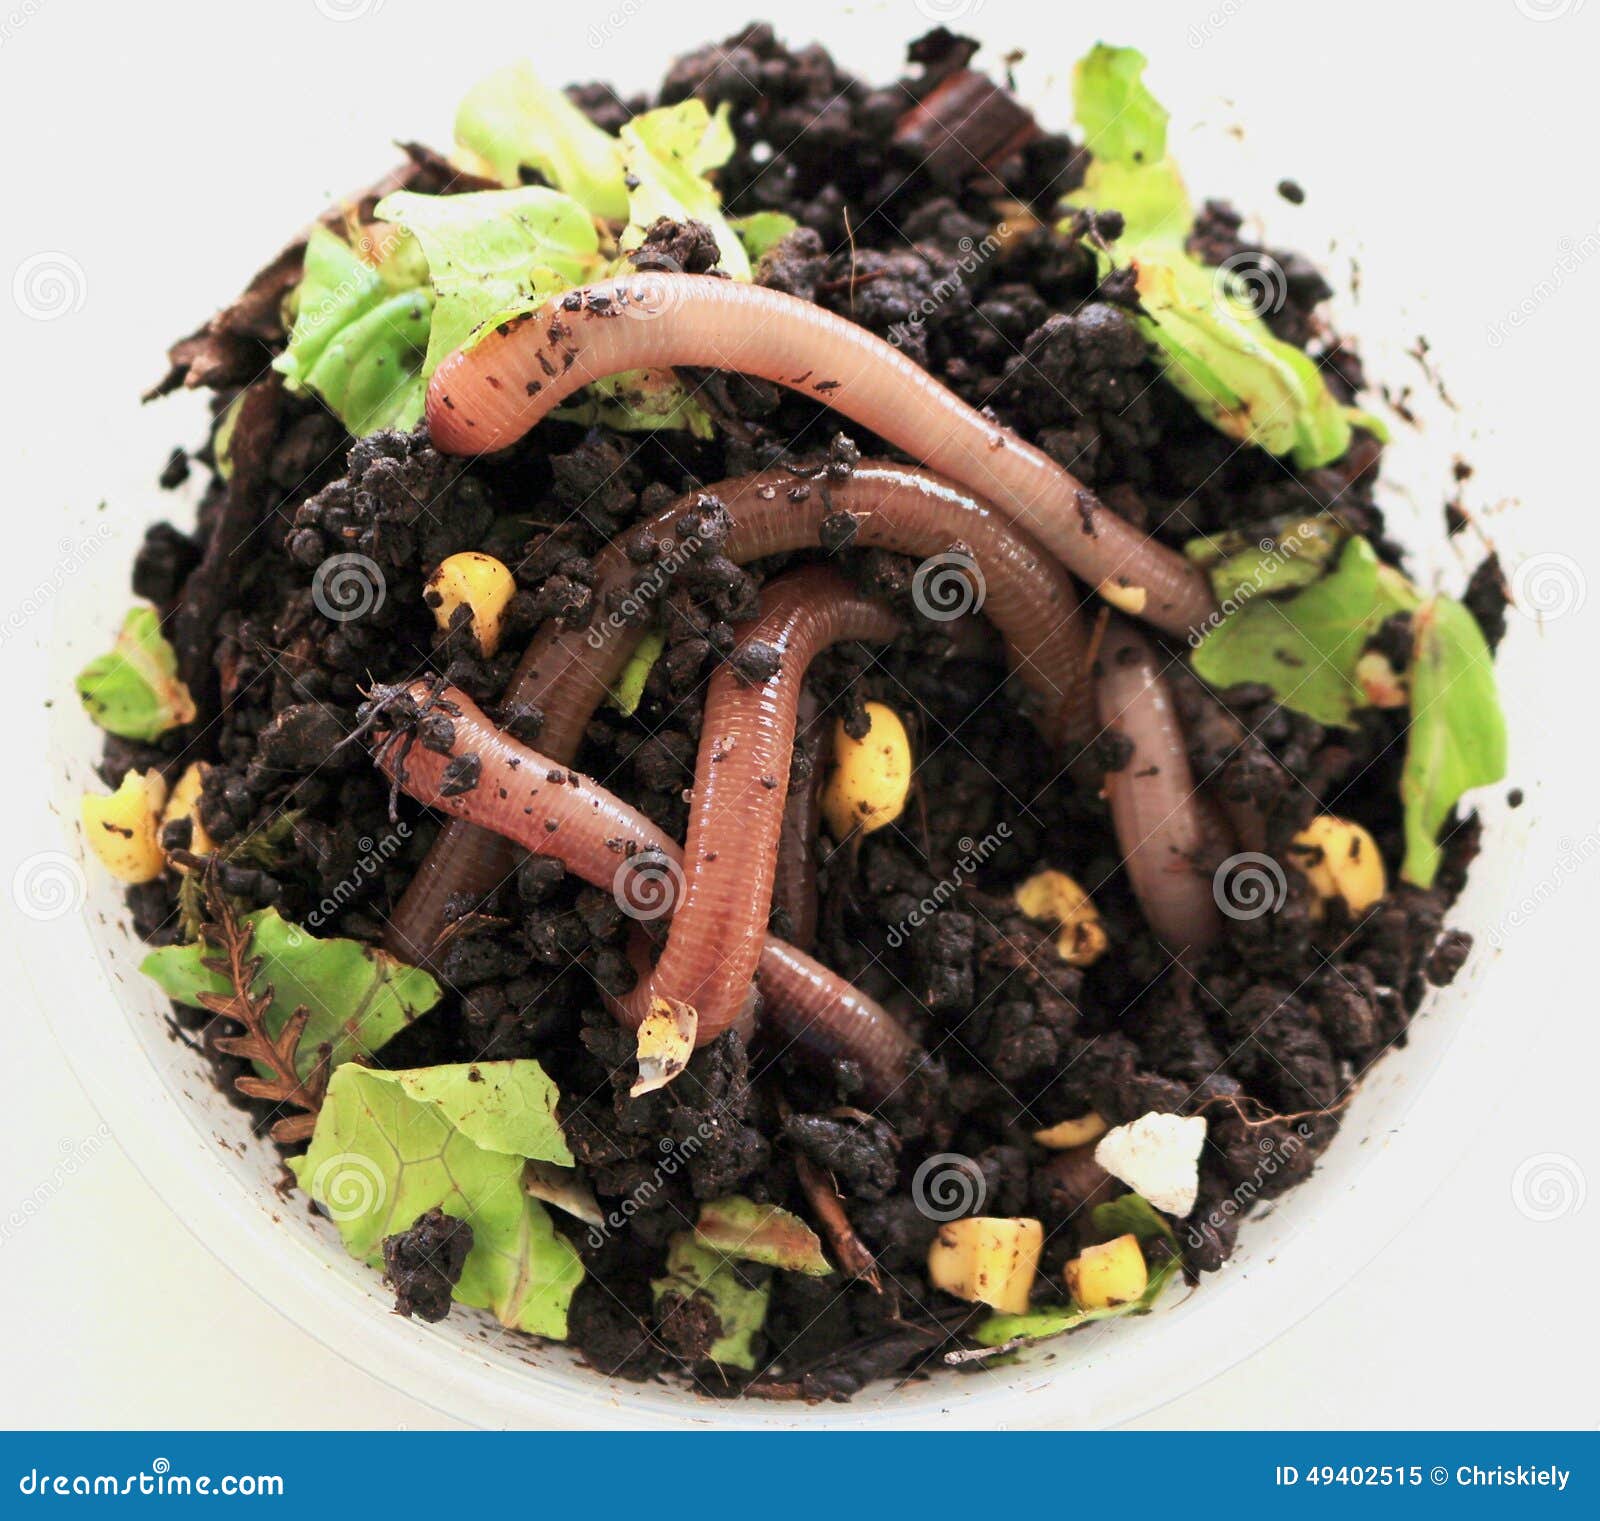 Australian Scrub Worms stock image. Image of life, fish - 49402515